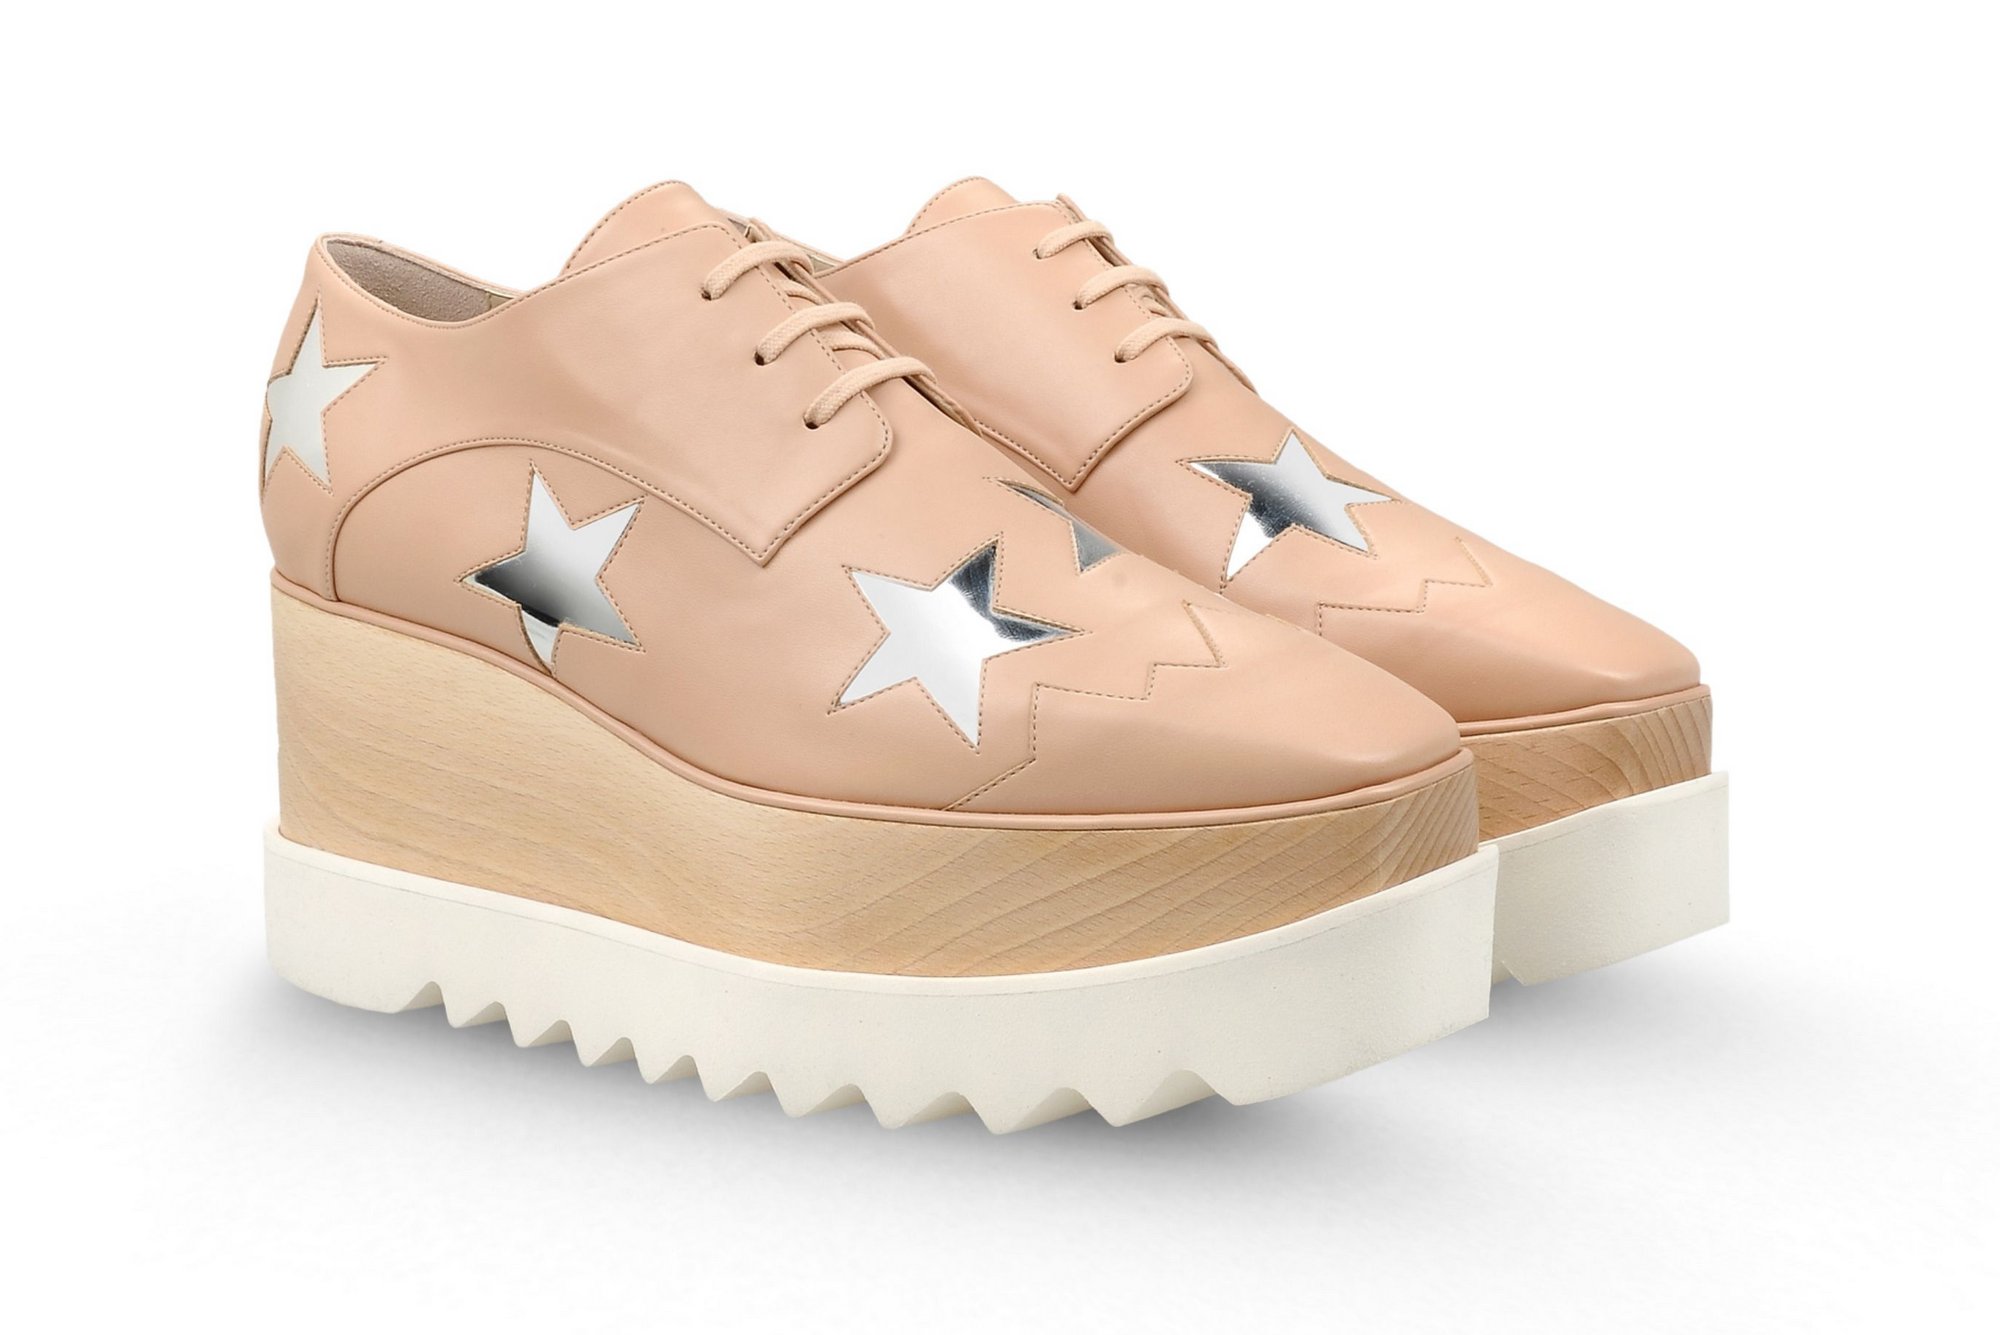 Stella McCartney star shoes